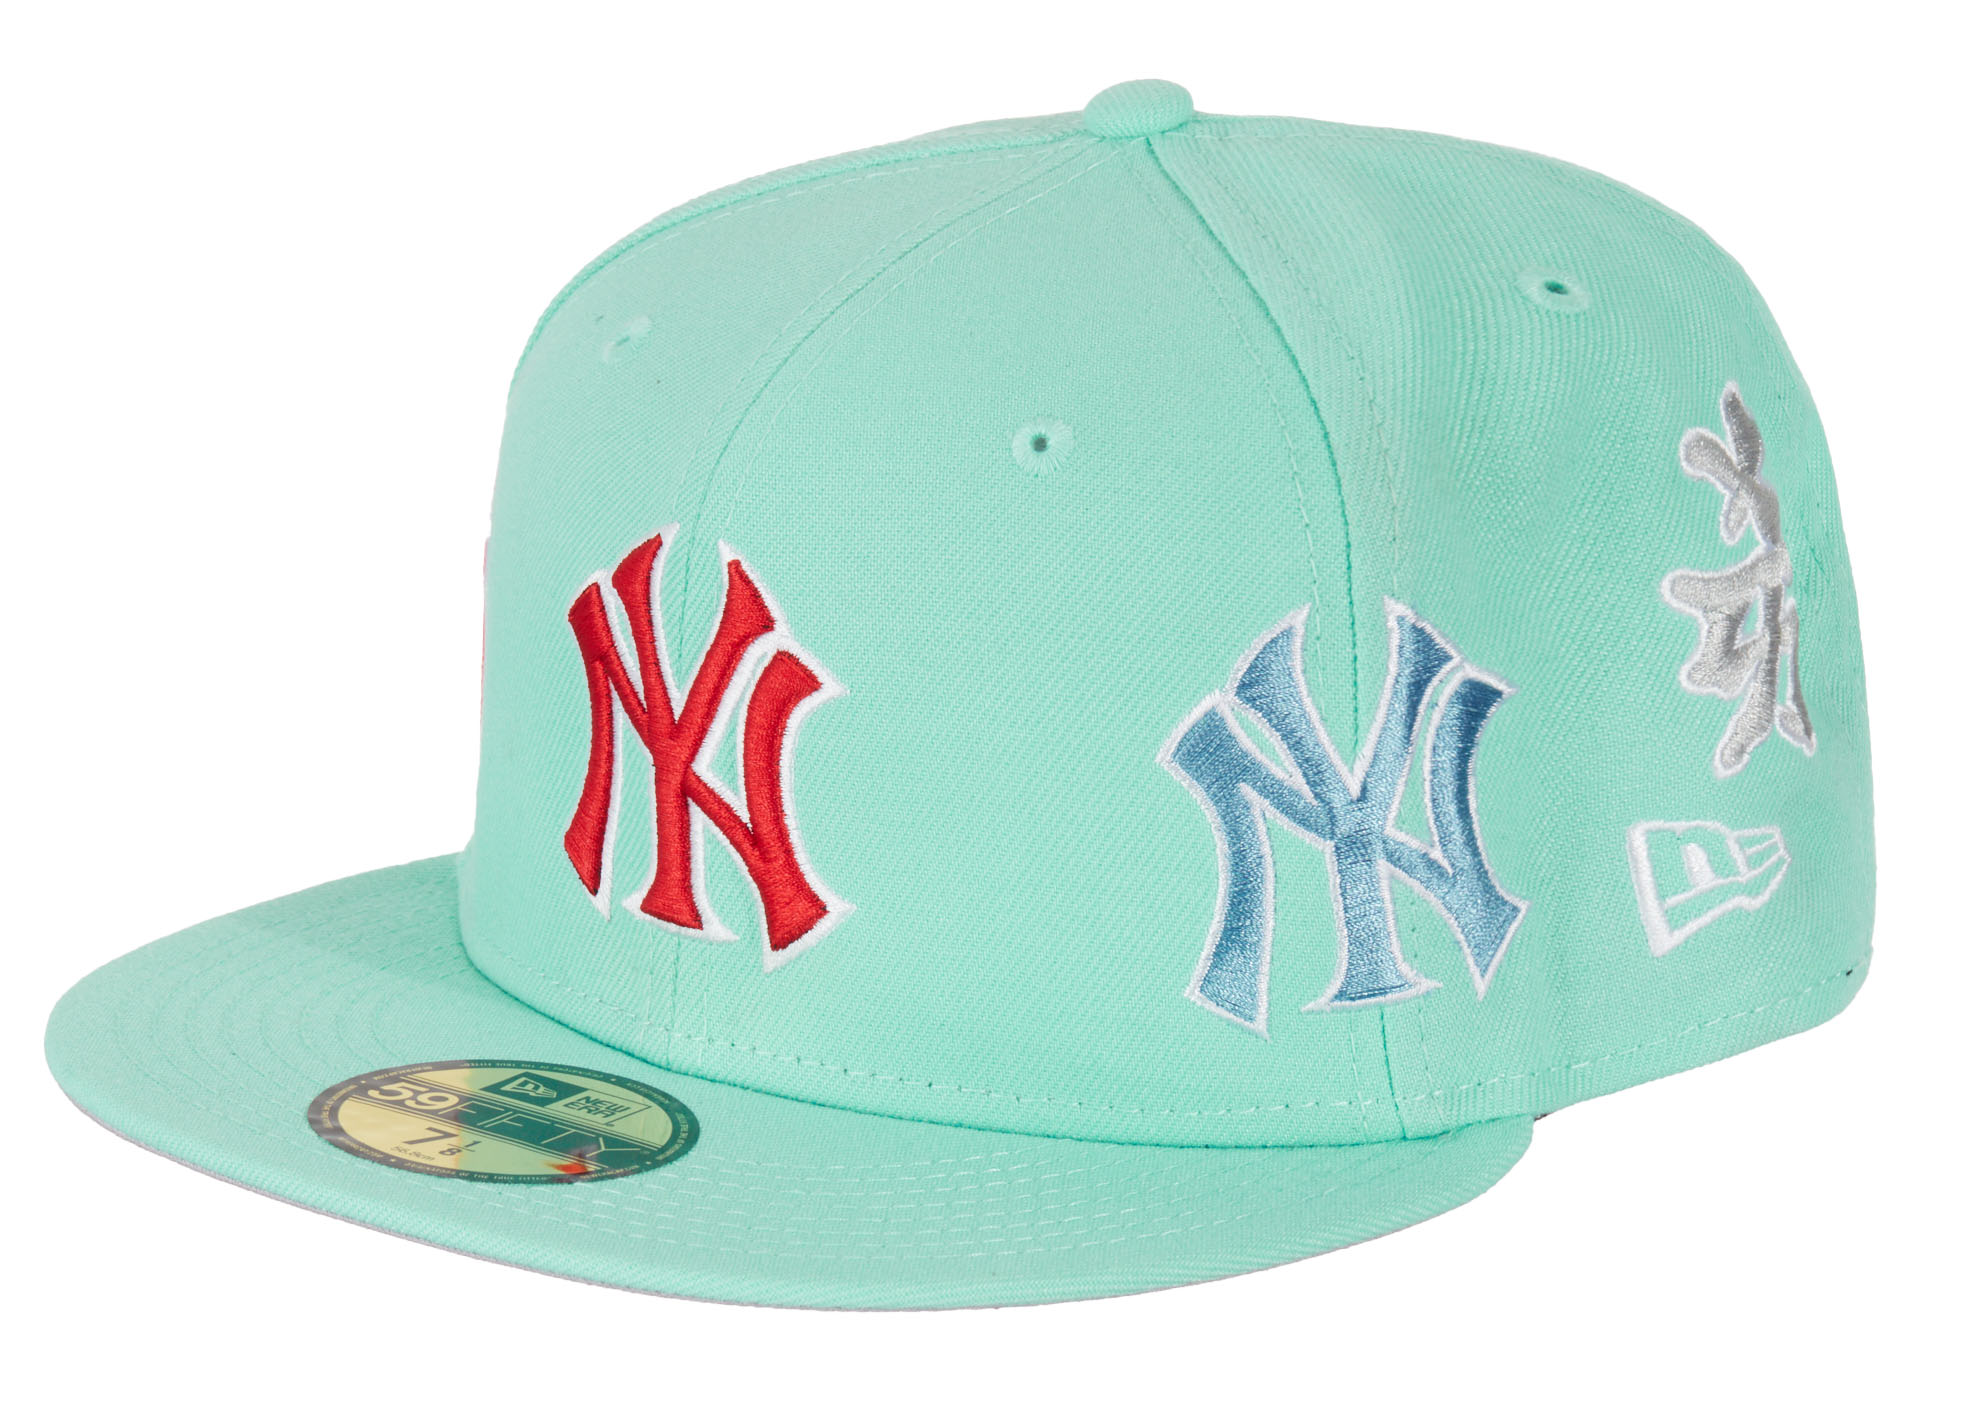 Supreme New York Yankees Kanji New Era Fitted Hat Light Aqua 